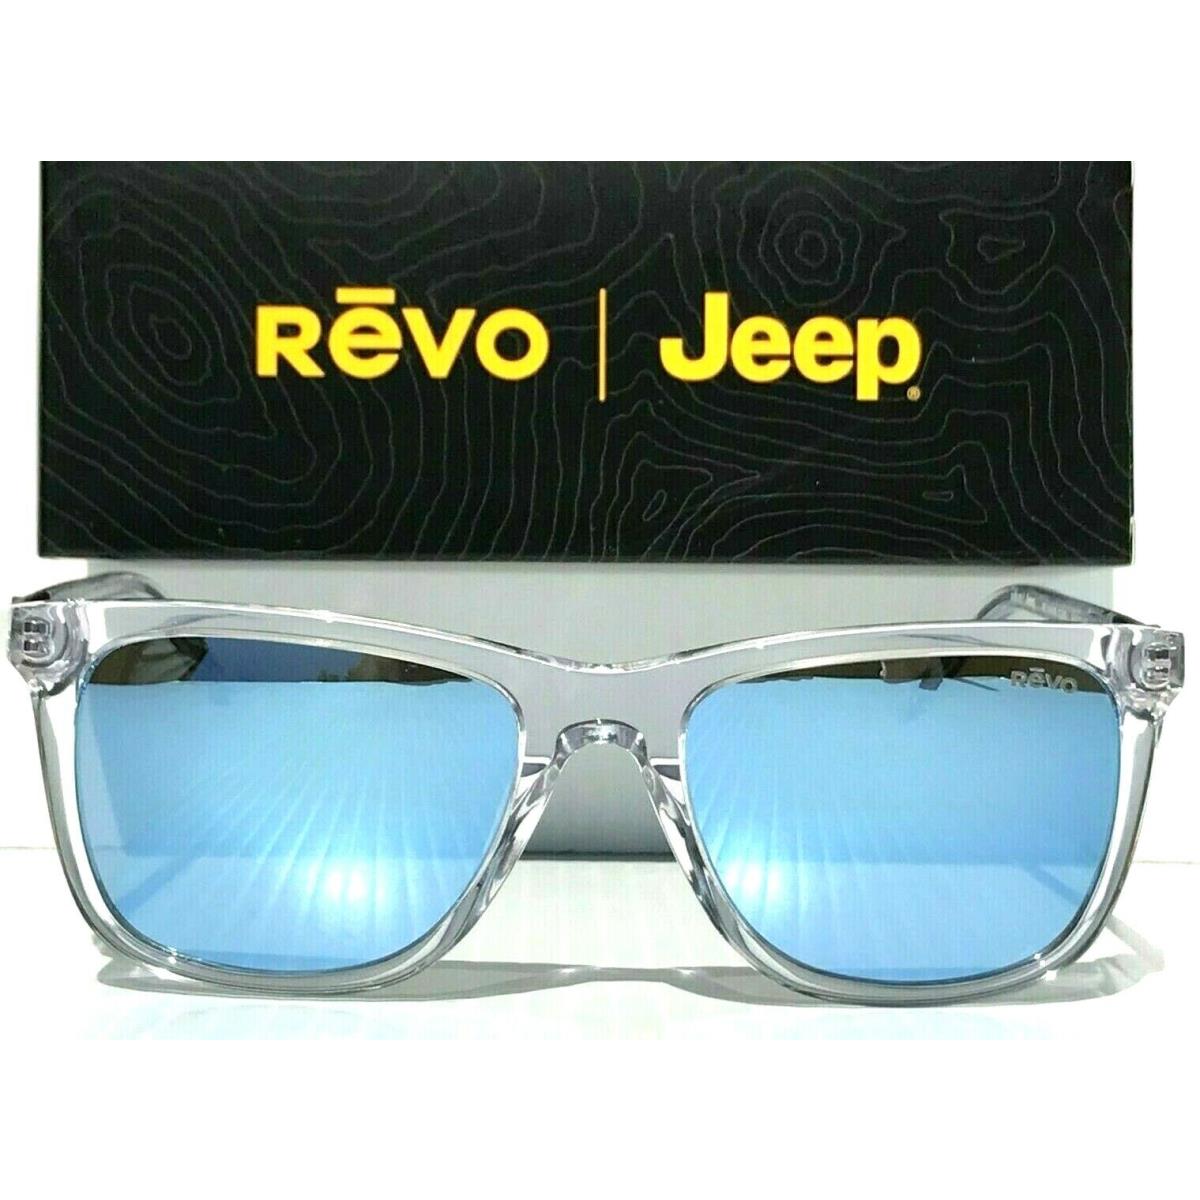 Jeep Revo Cove Clear Crystal Polished Polarized Blue Water Sunglass 1164 09 BL